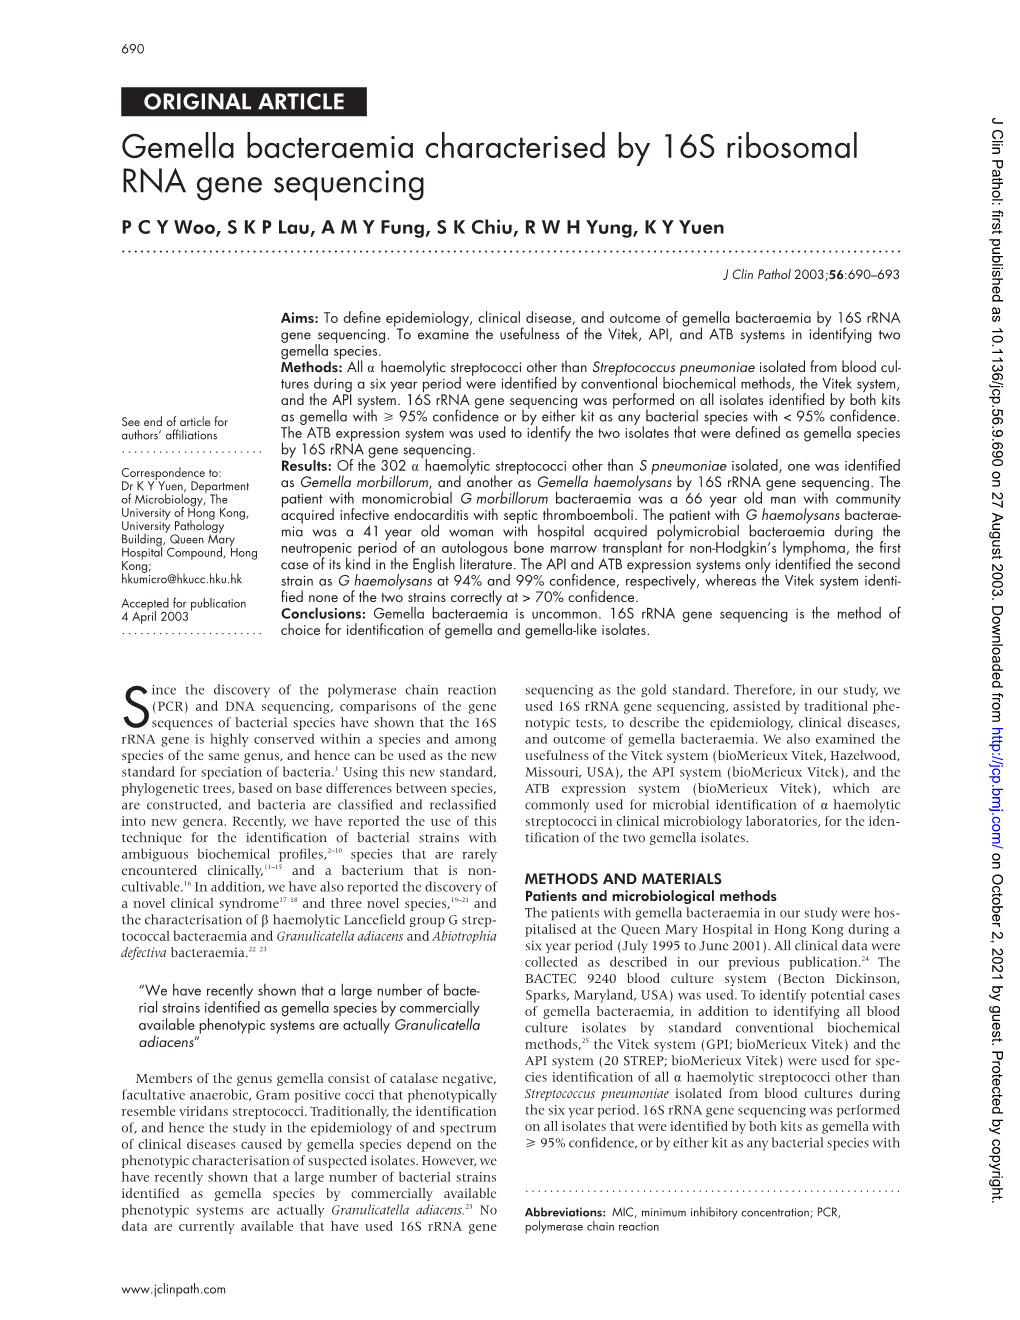 Gemella Bacteraemia Characterised by 16S Ribosomal RNA Gene Sequencing Pcywoo,Skplau,Amyfung, S K Chiu,Rwhyung, K Y Yuen